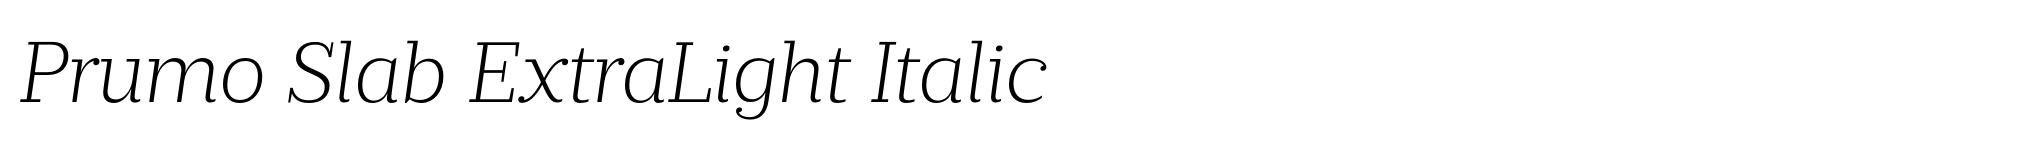 Prumo Slab ExtraLight Italic image